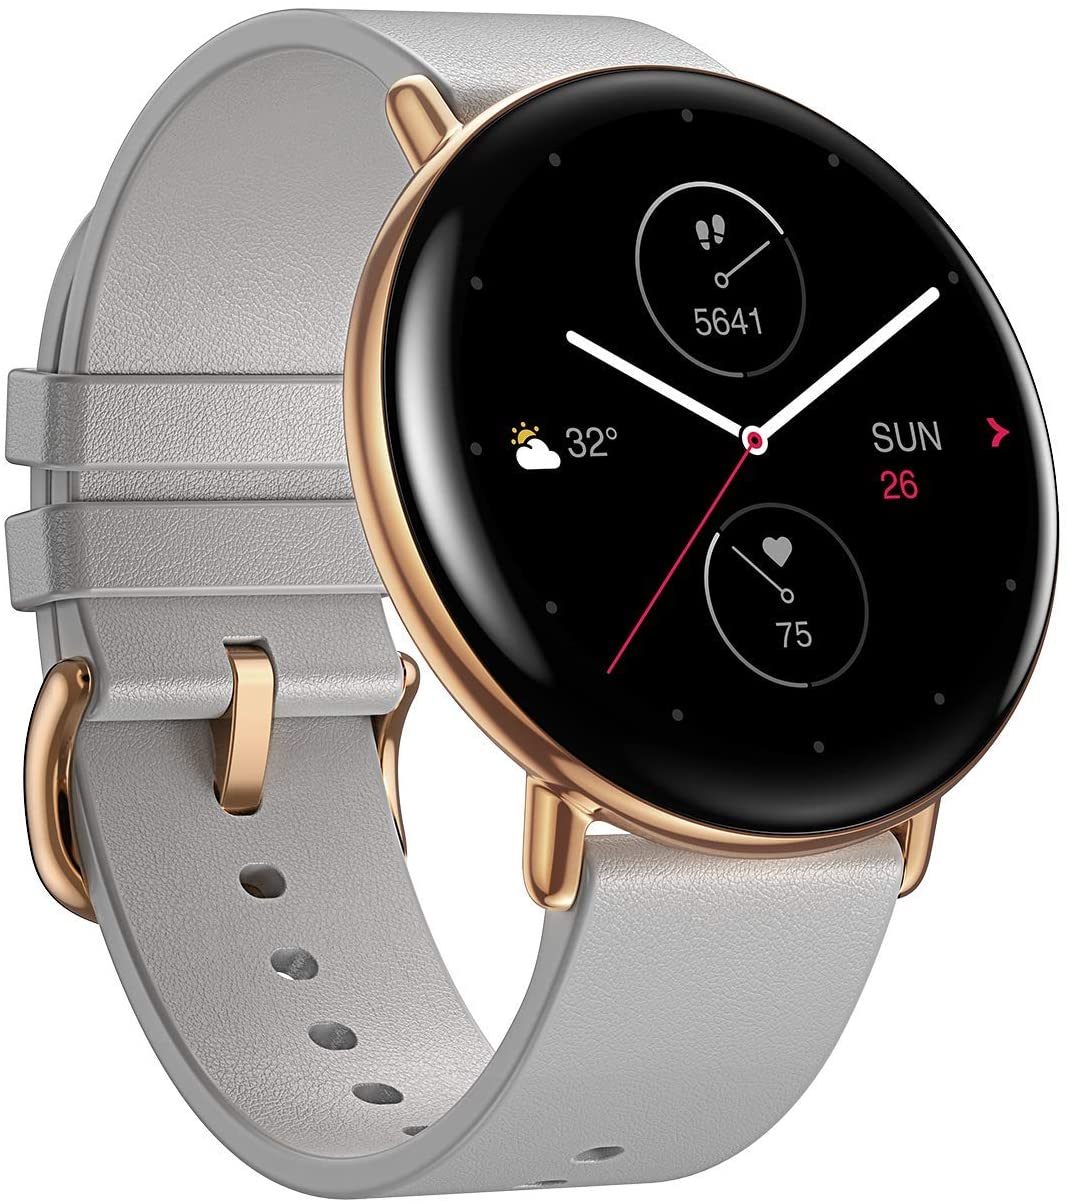 Xiaomi Smartwatch amazfit zepp e round moon grey